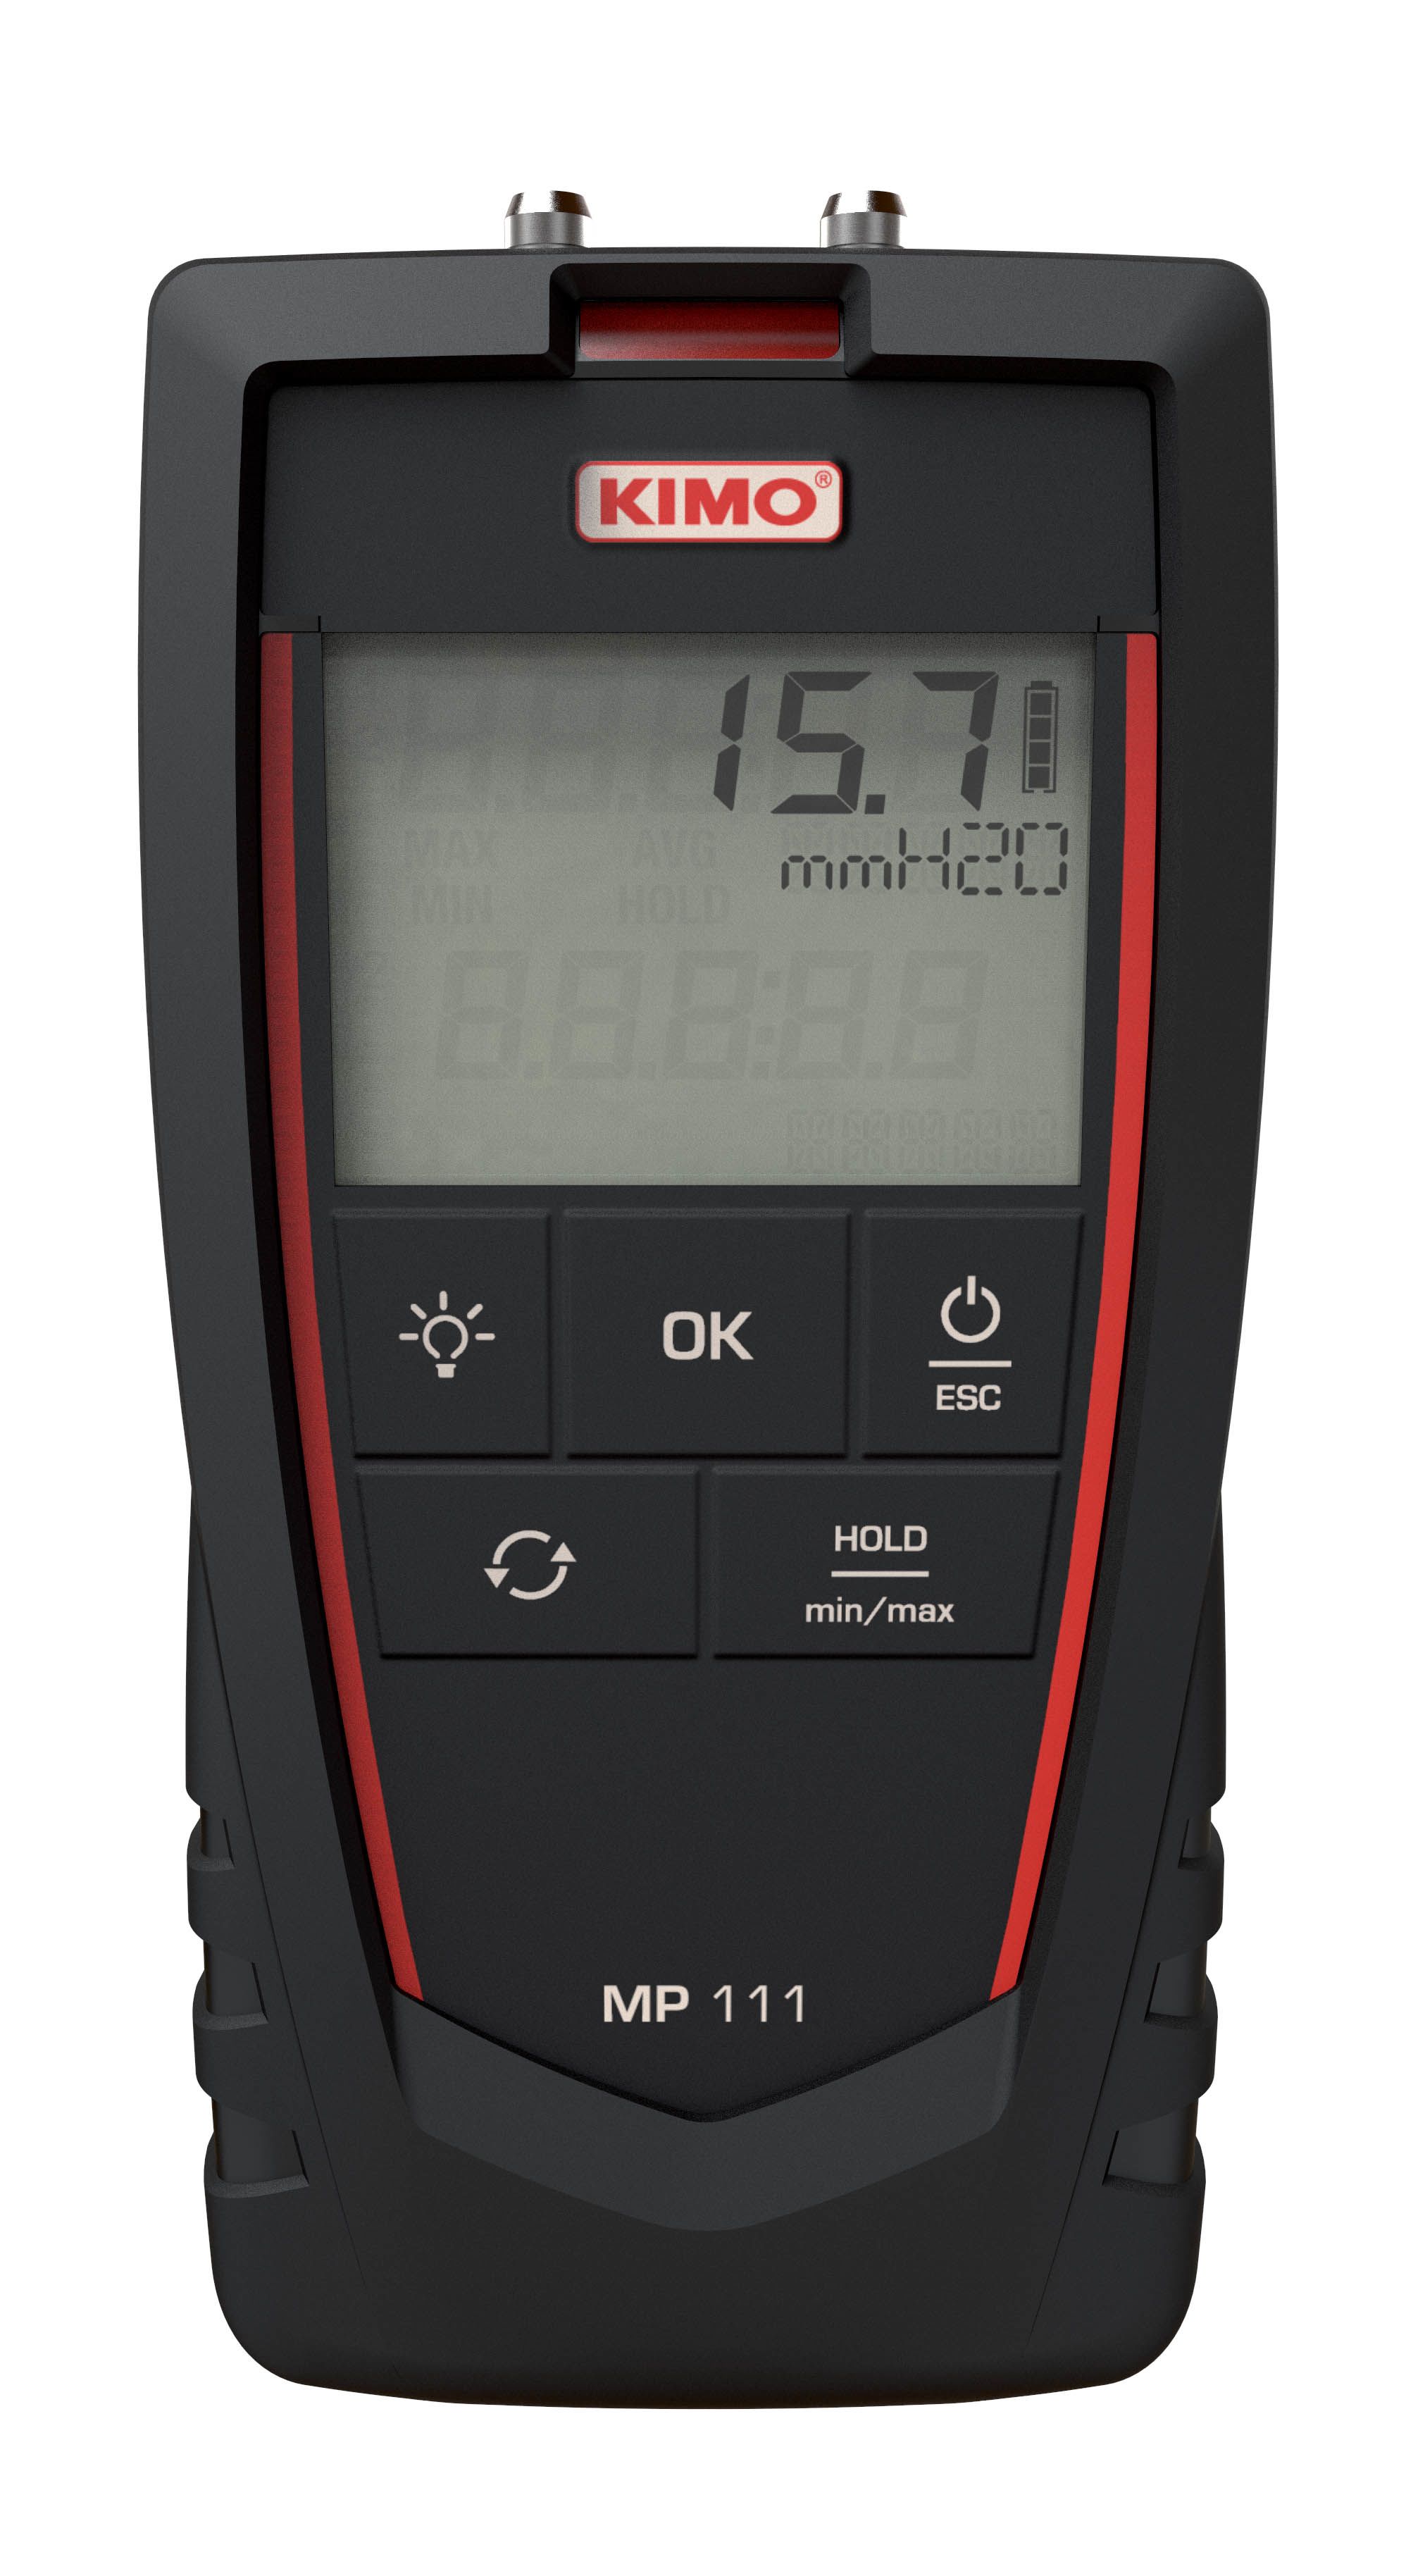 KIMO Differential Manometer With 2 Pressure Port/s, Max Pressure Measurement 9806.65Pa